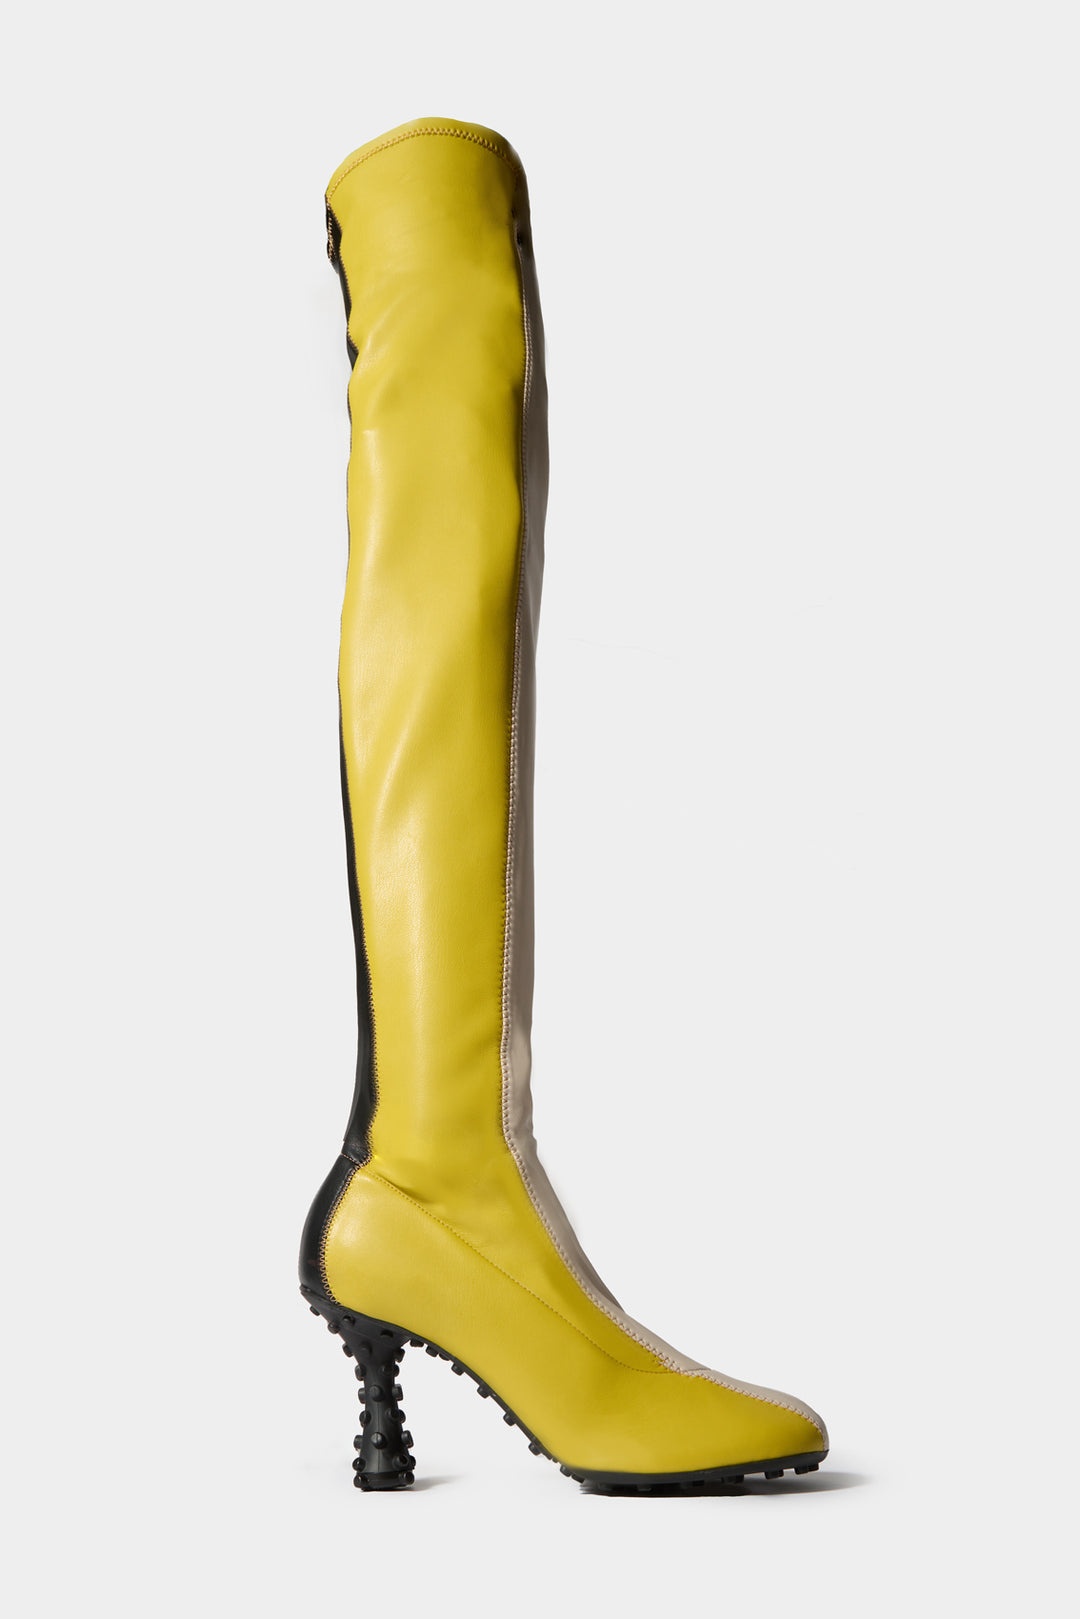 1000CHIODI HIGH BOOTS / yellow - 1